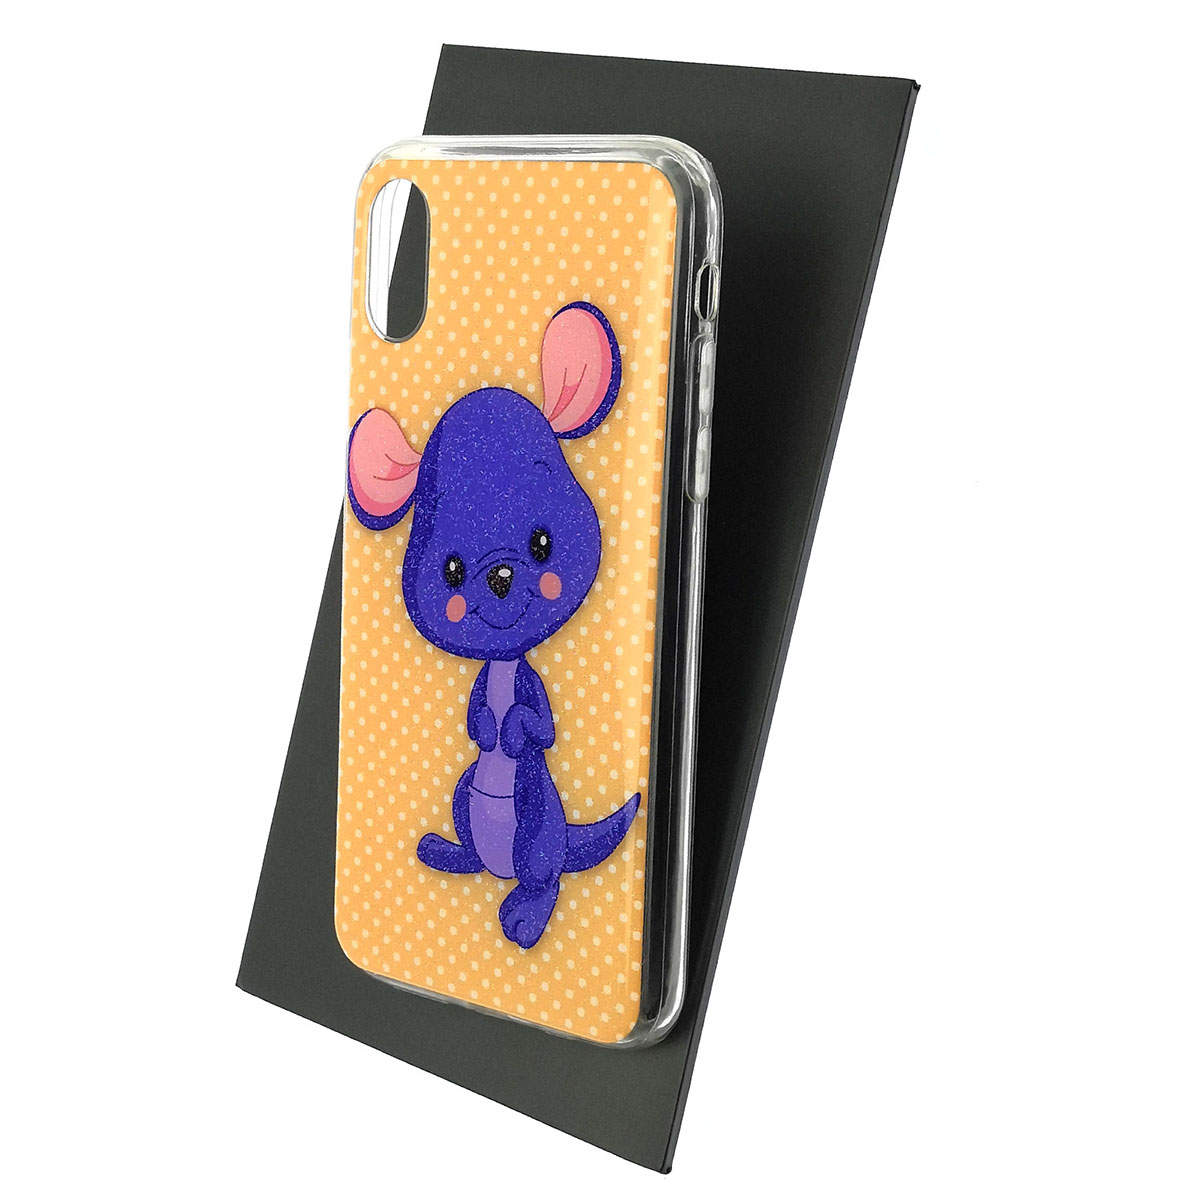 Чехол накладка для APPLE iPhone X, iPhone XS, силикон, рисунок Синий кенгуренок